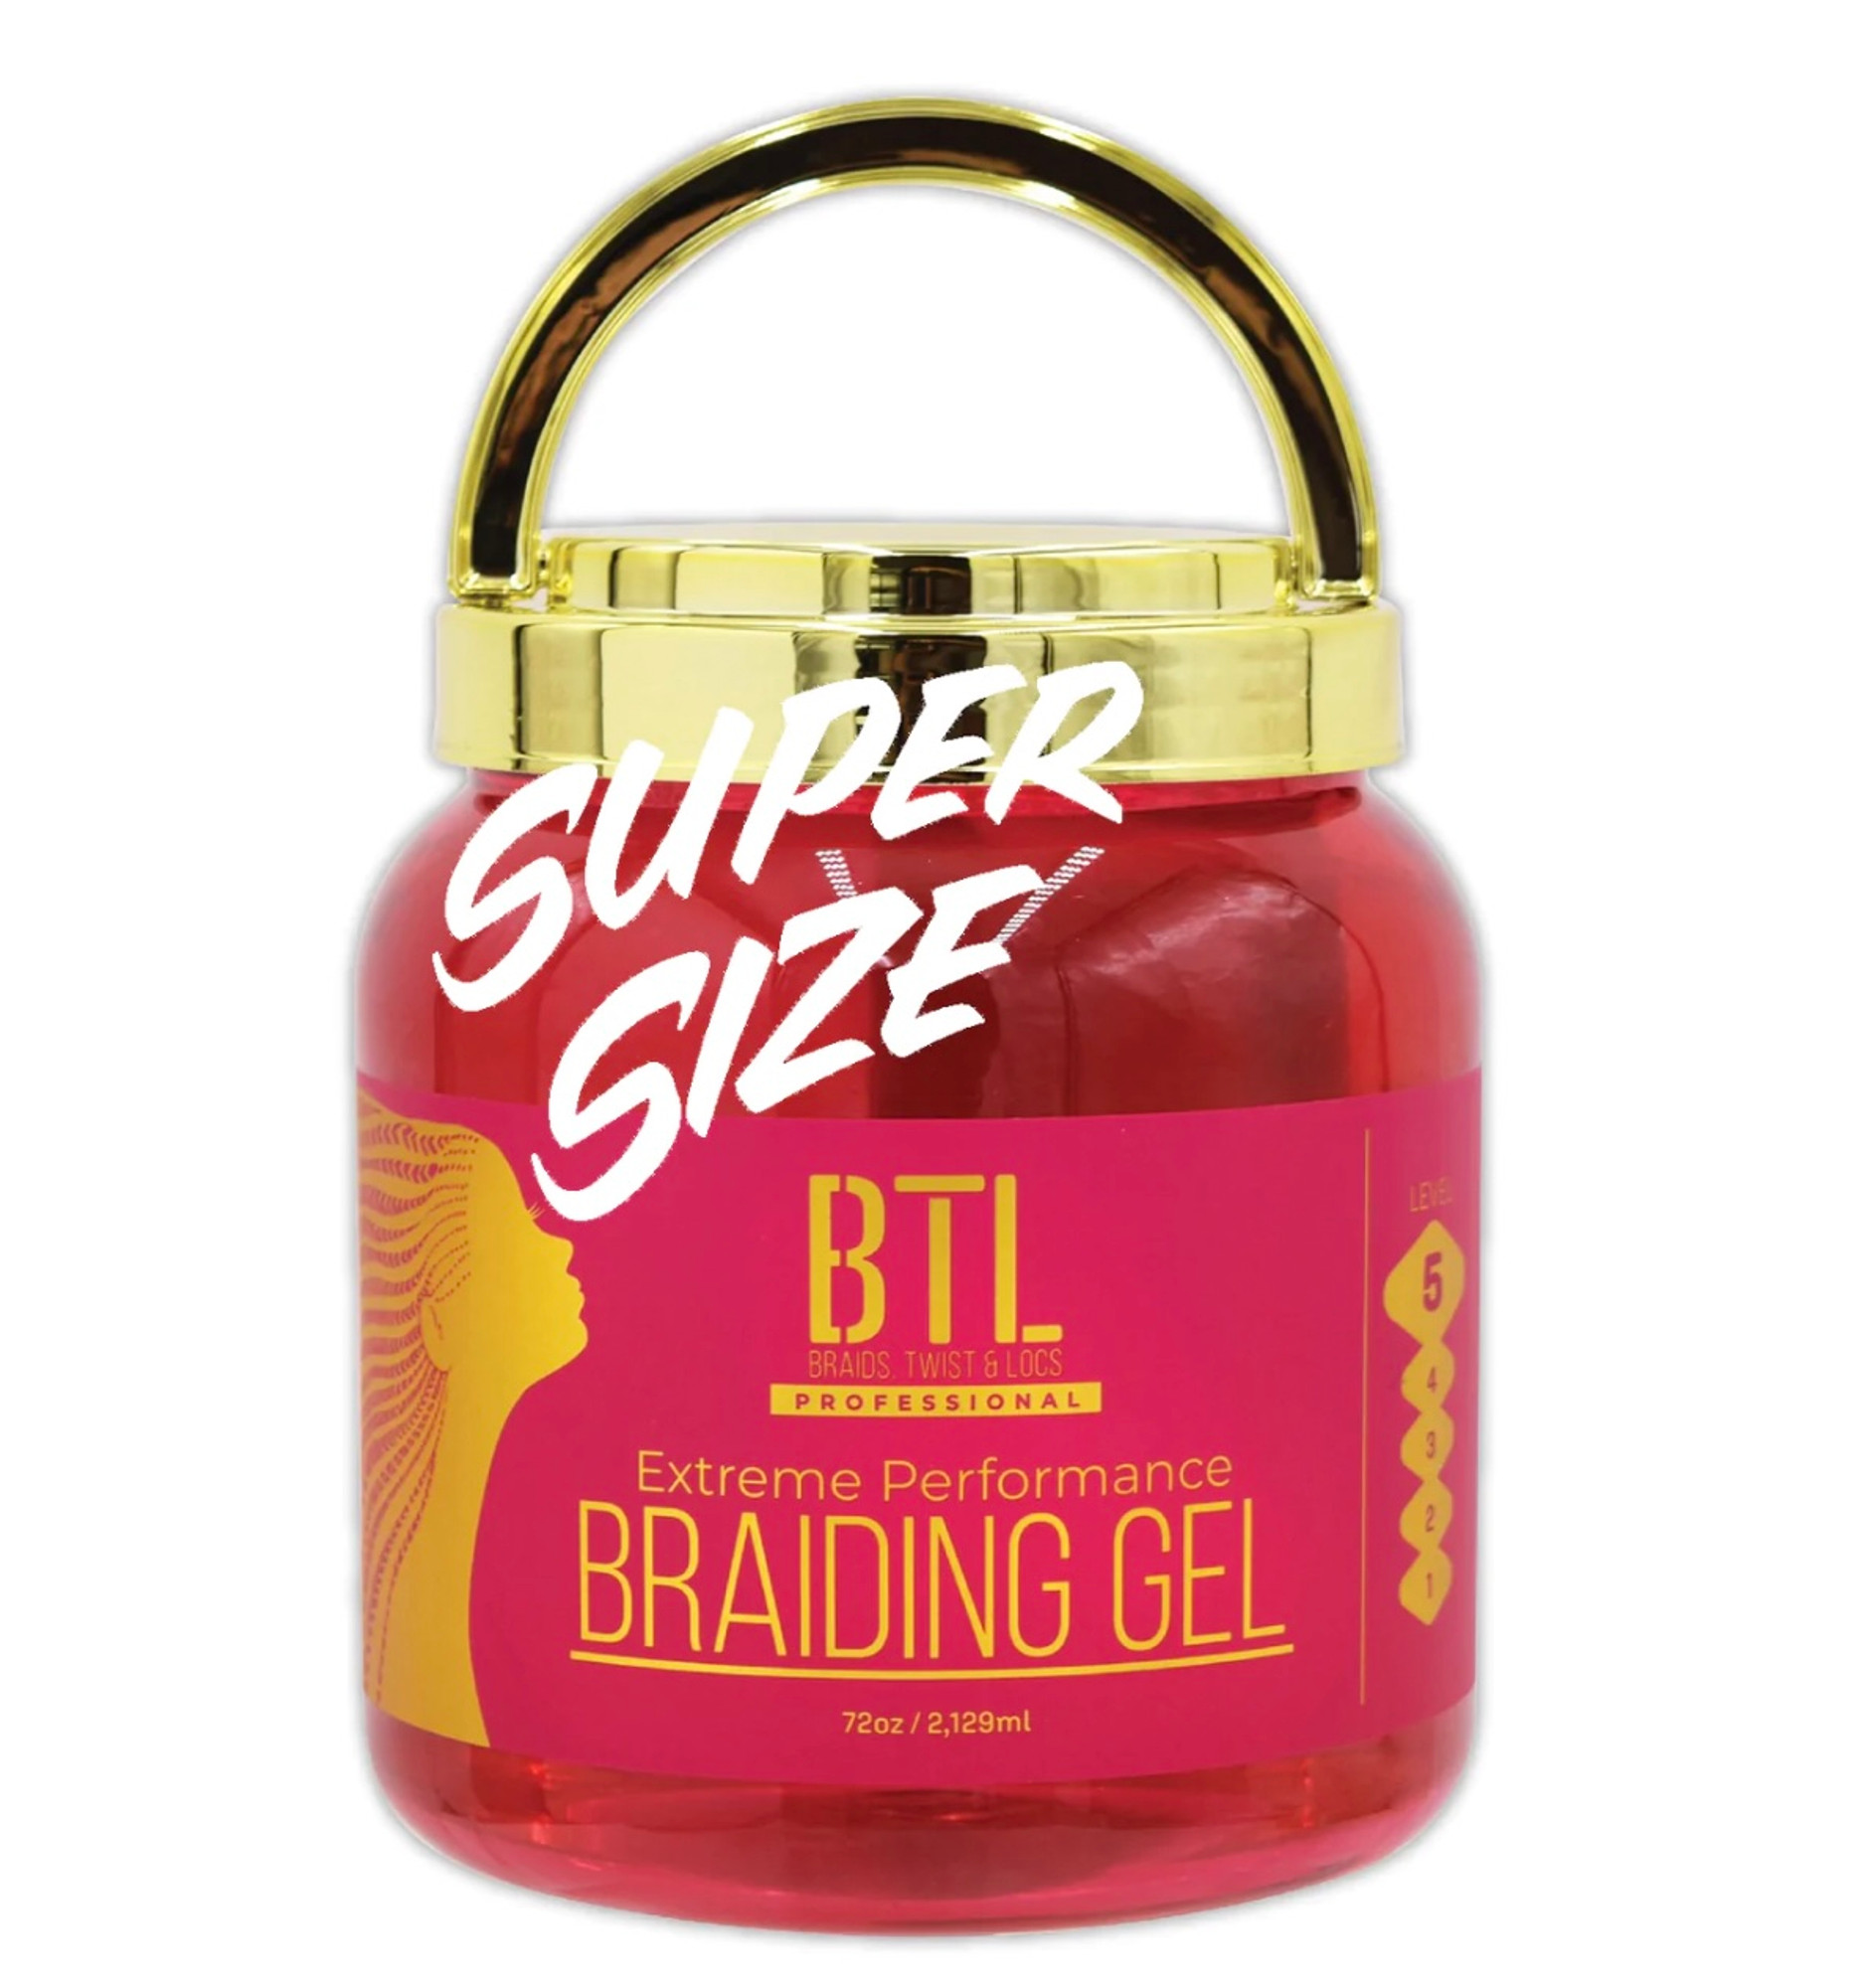 BTL Professional Braiding Gel Extreme Performance (8 oz - 72 oz)